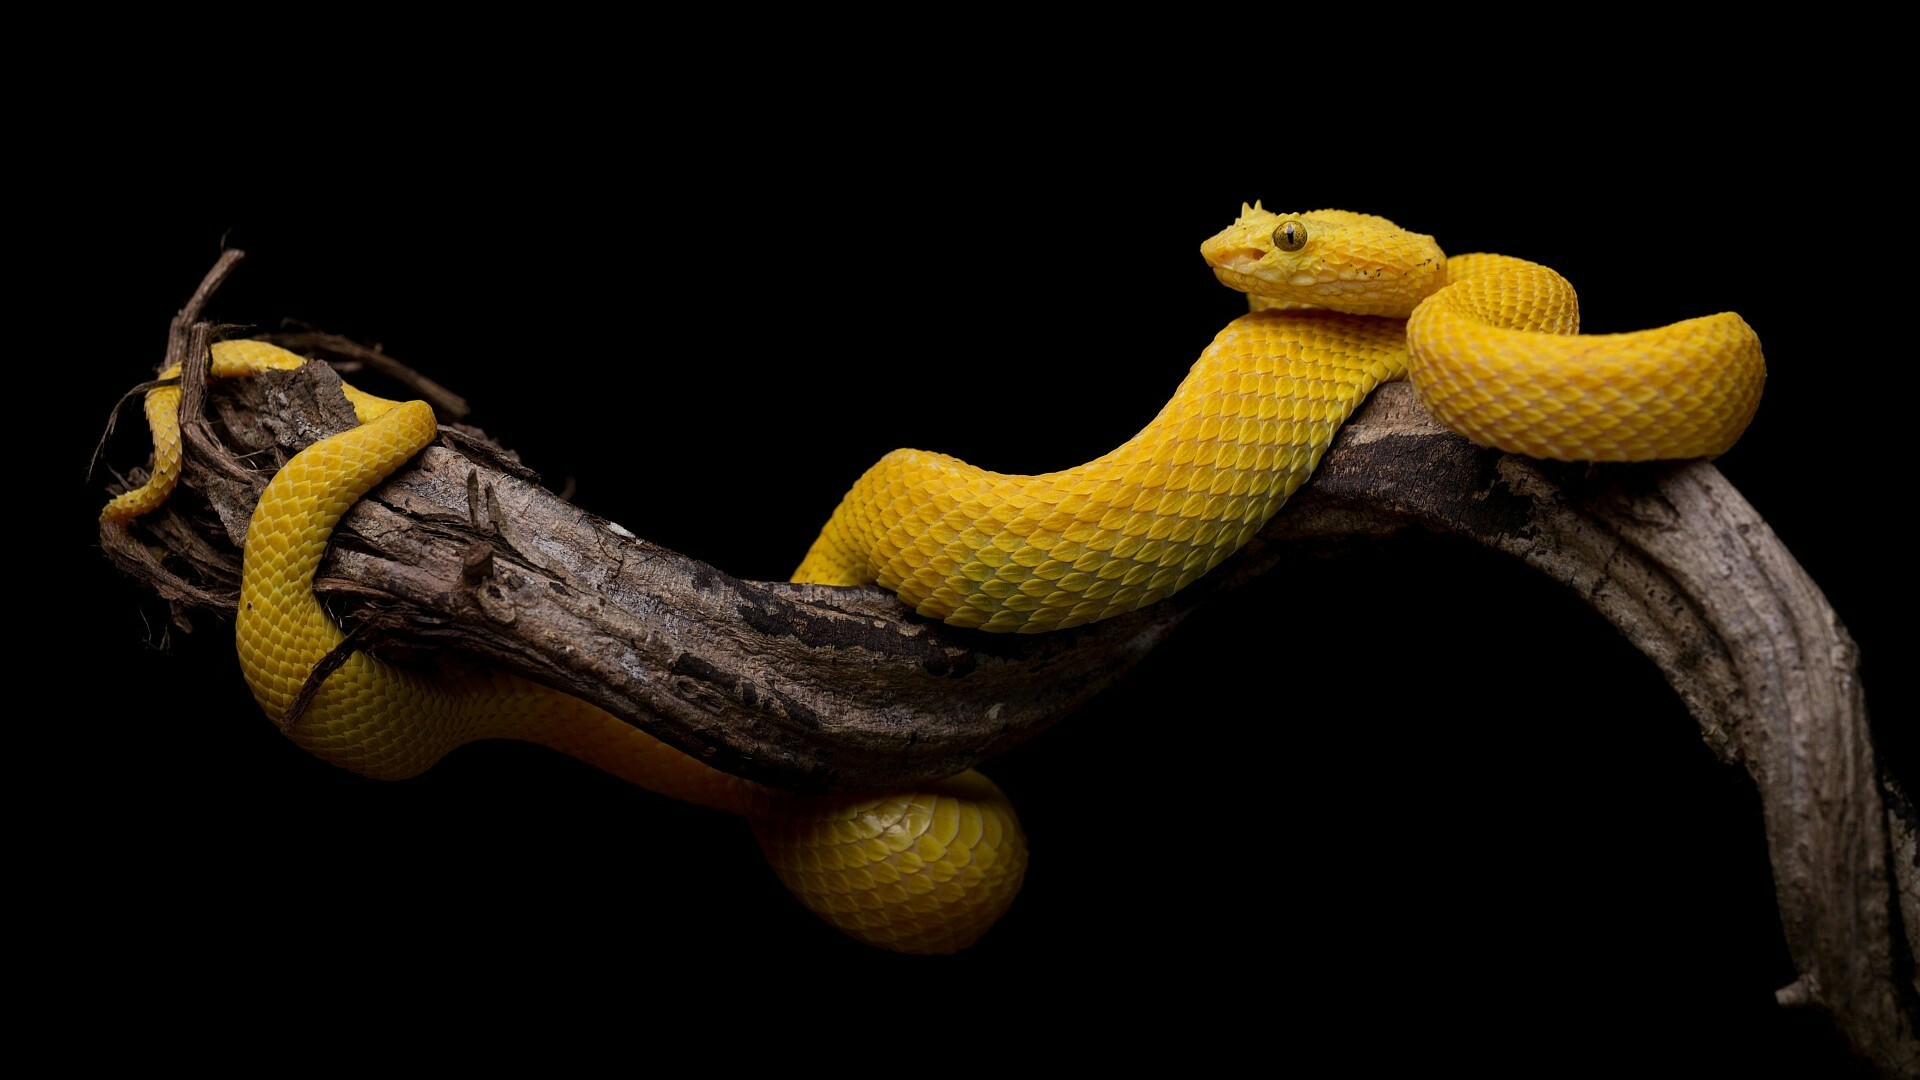 Viper Snake Wallpaper 70 Images